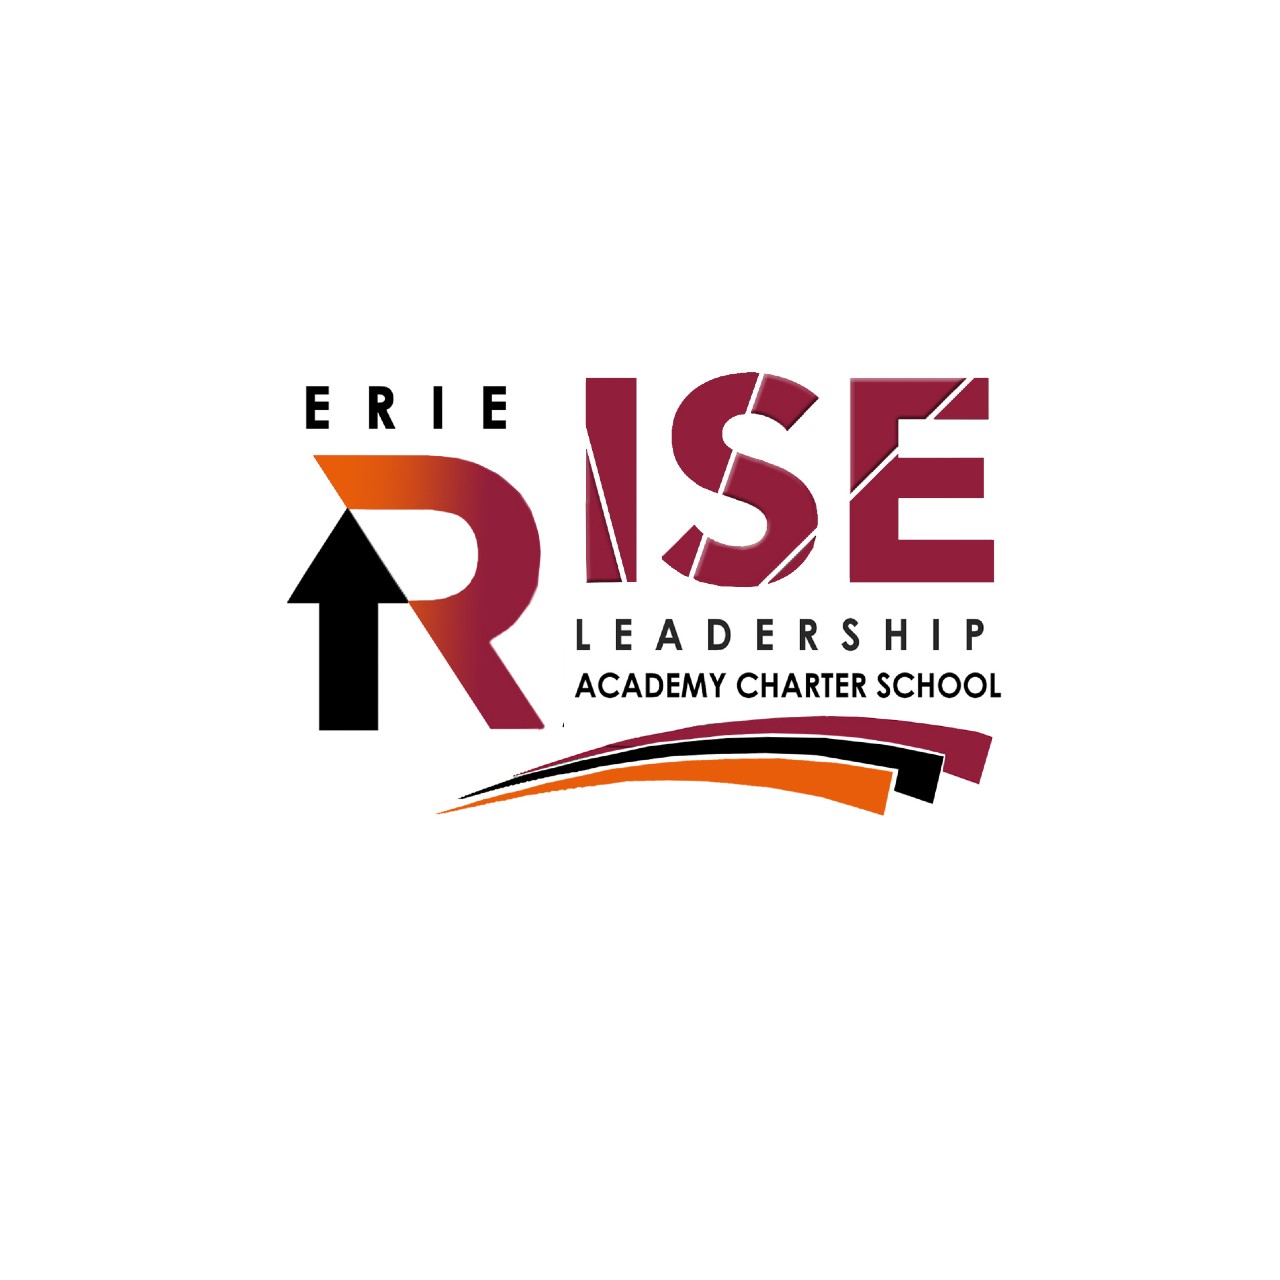 Erie Rise 3